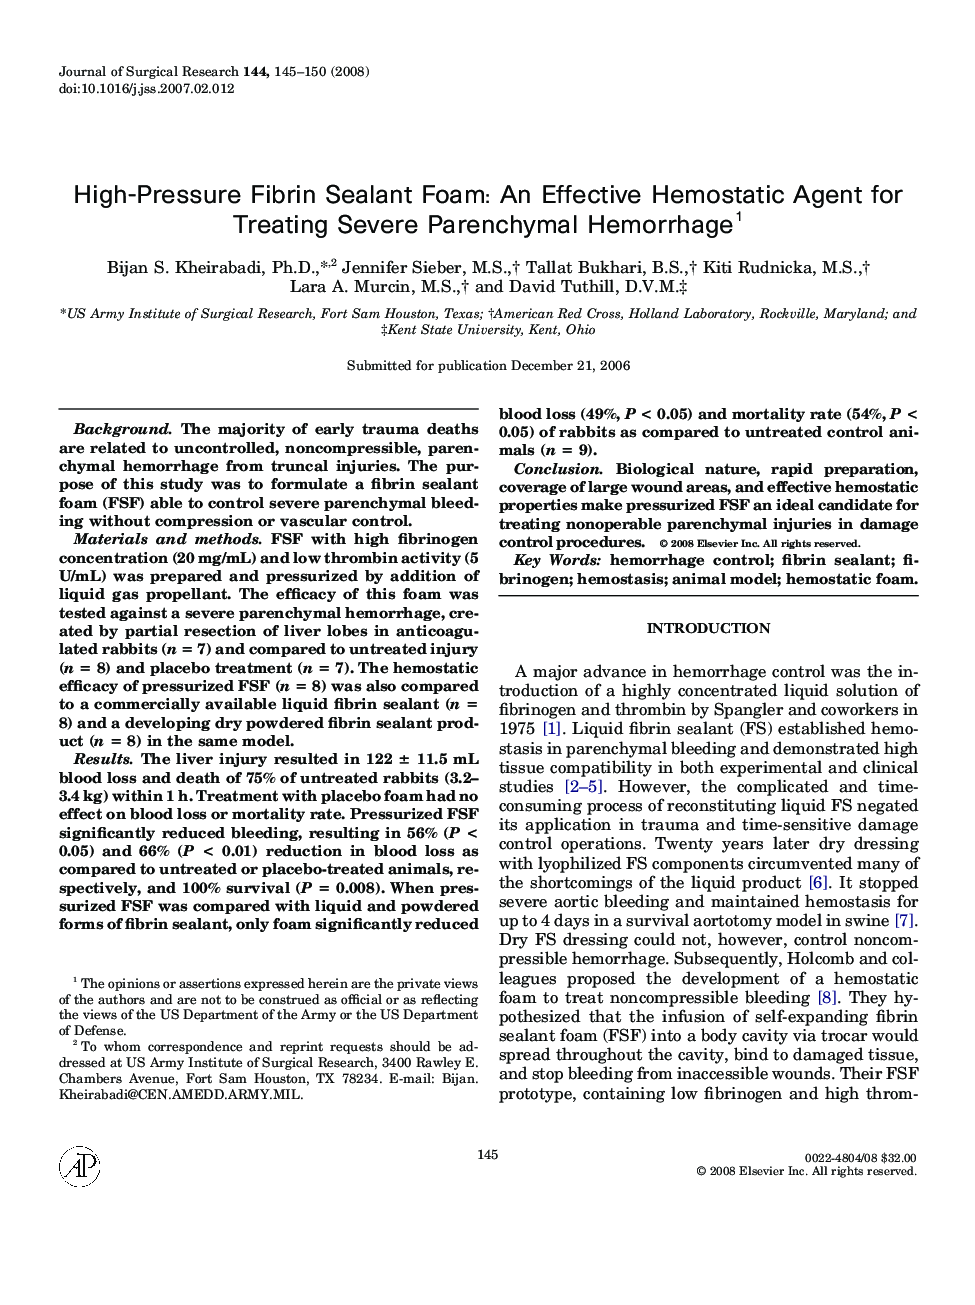 High-Pressure Fibrin Sealant Foam: An Effective Hemostatic Agent for Treating Severe Parenchymal Hemorrhage 1